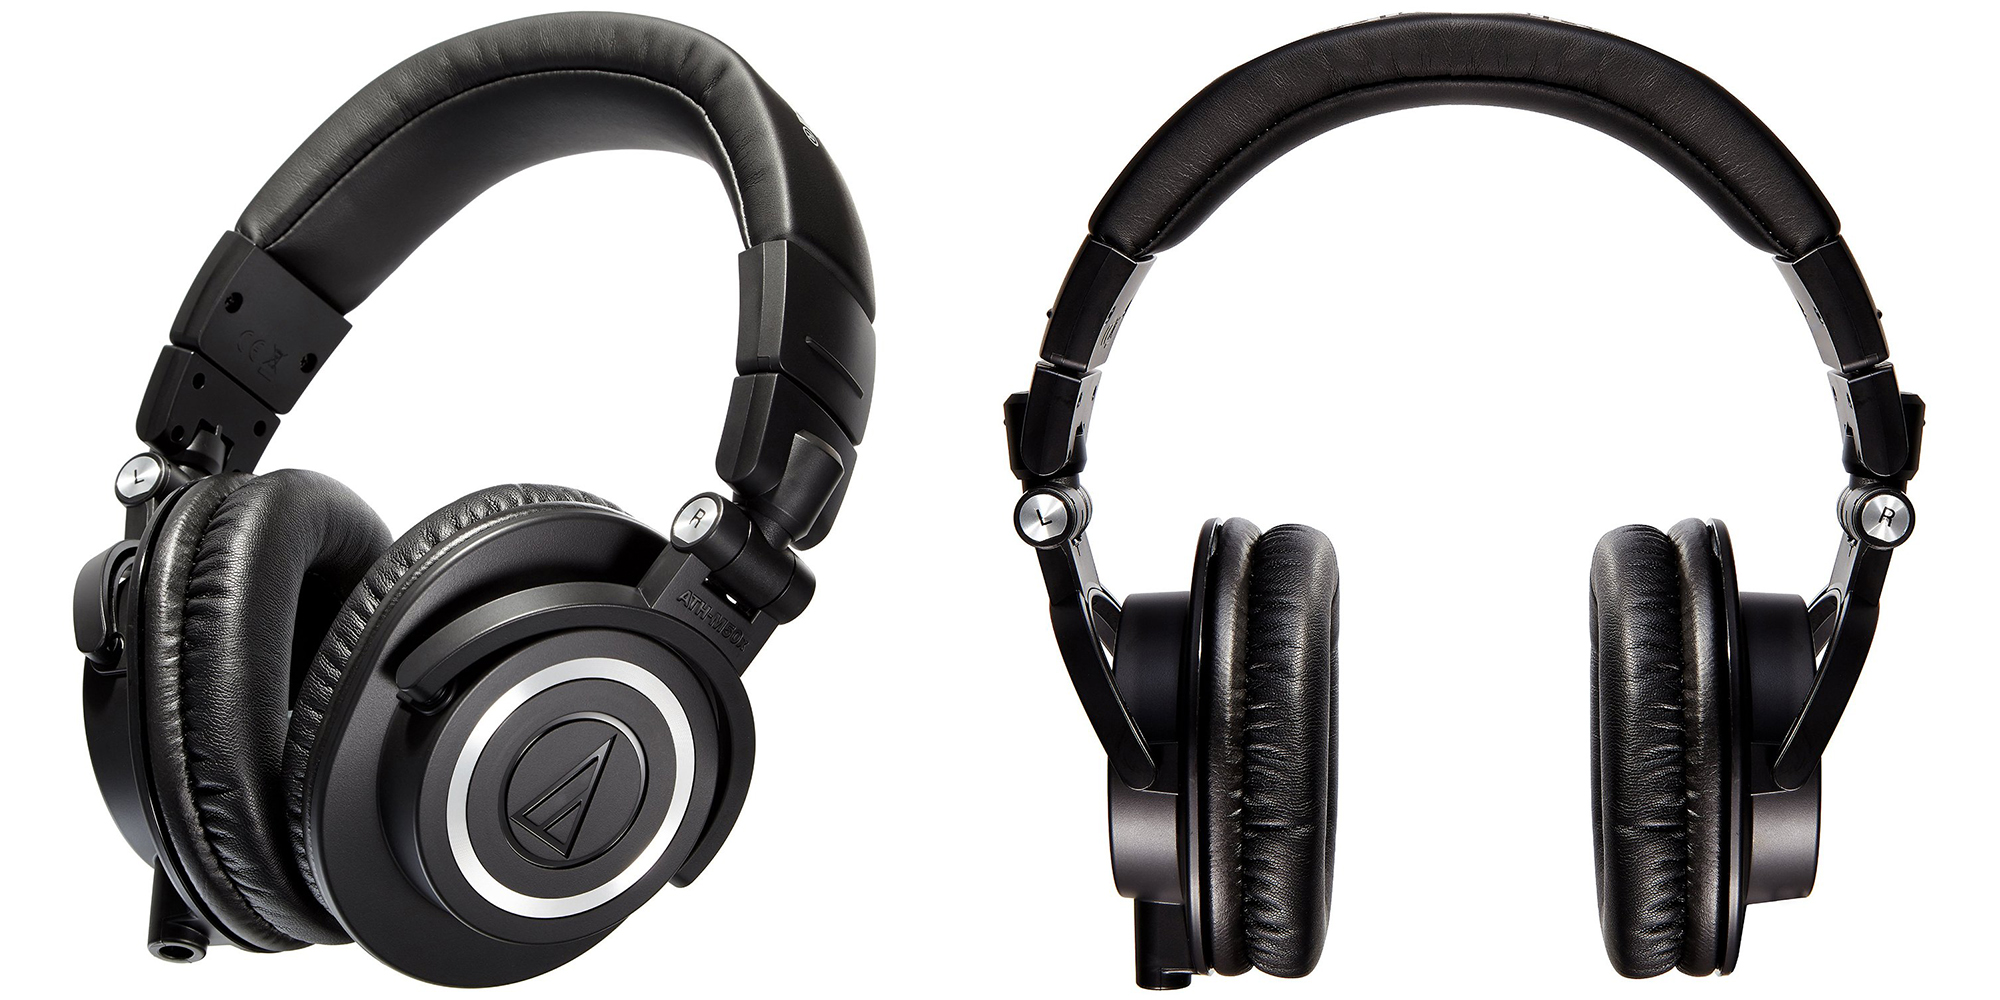 Daily Deals: Audio-Technica ATH-M50X Pro Studio Headphones (Refurb) $90,  LifeProof FRĒ iPhone 6 Waterproof Case $18, more